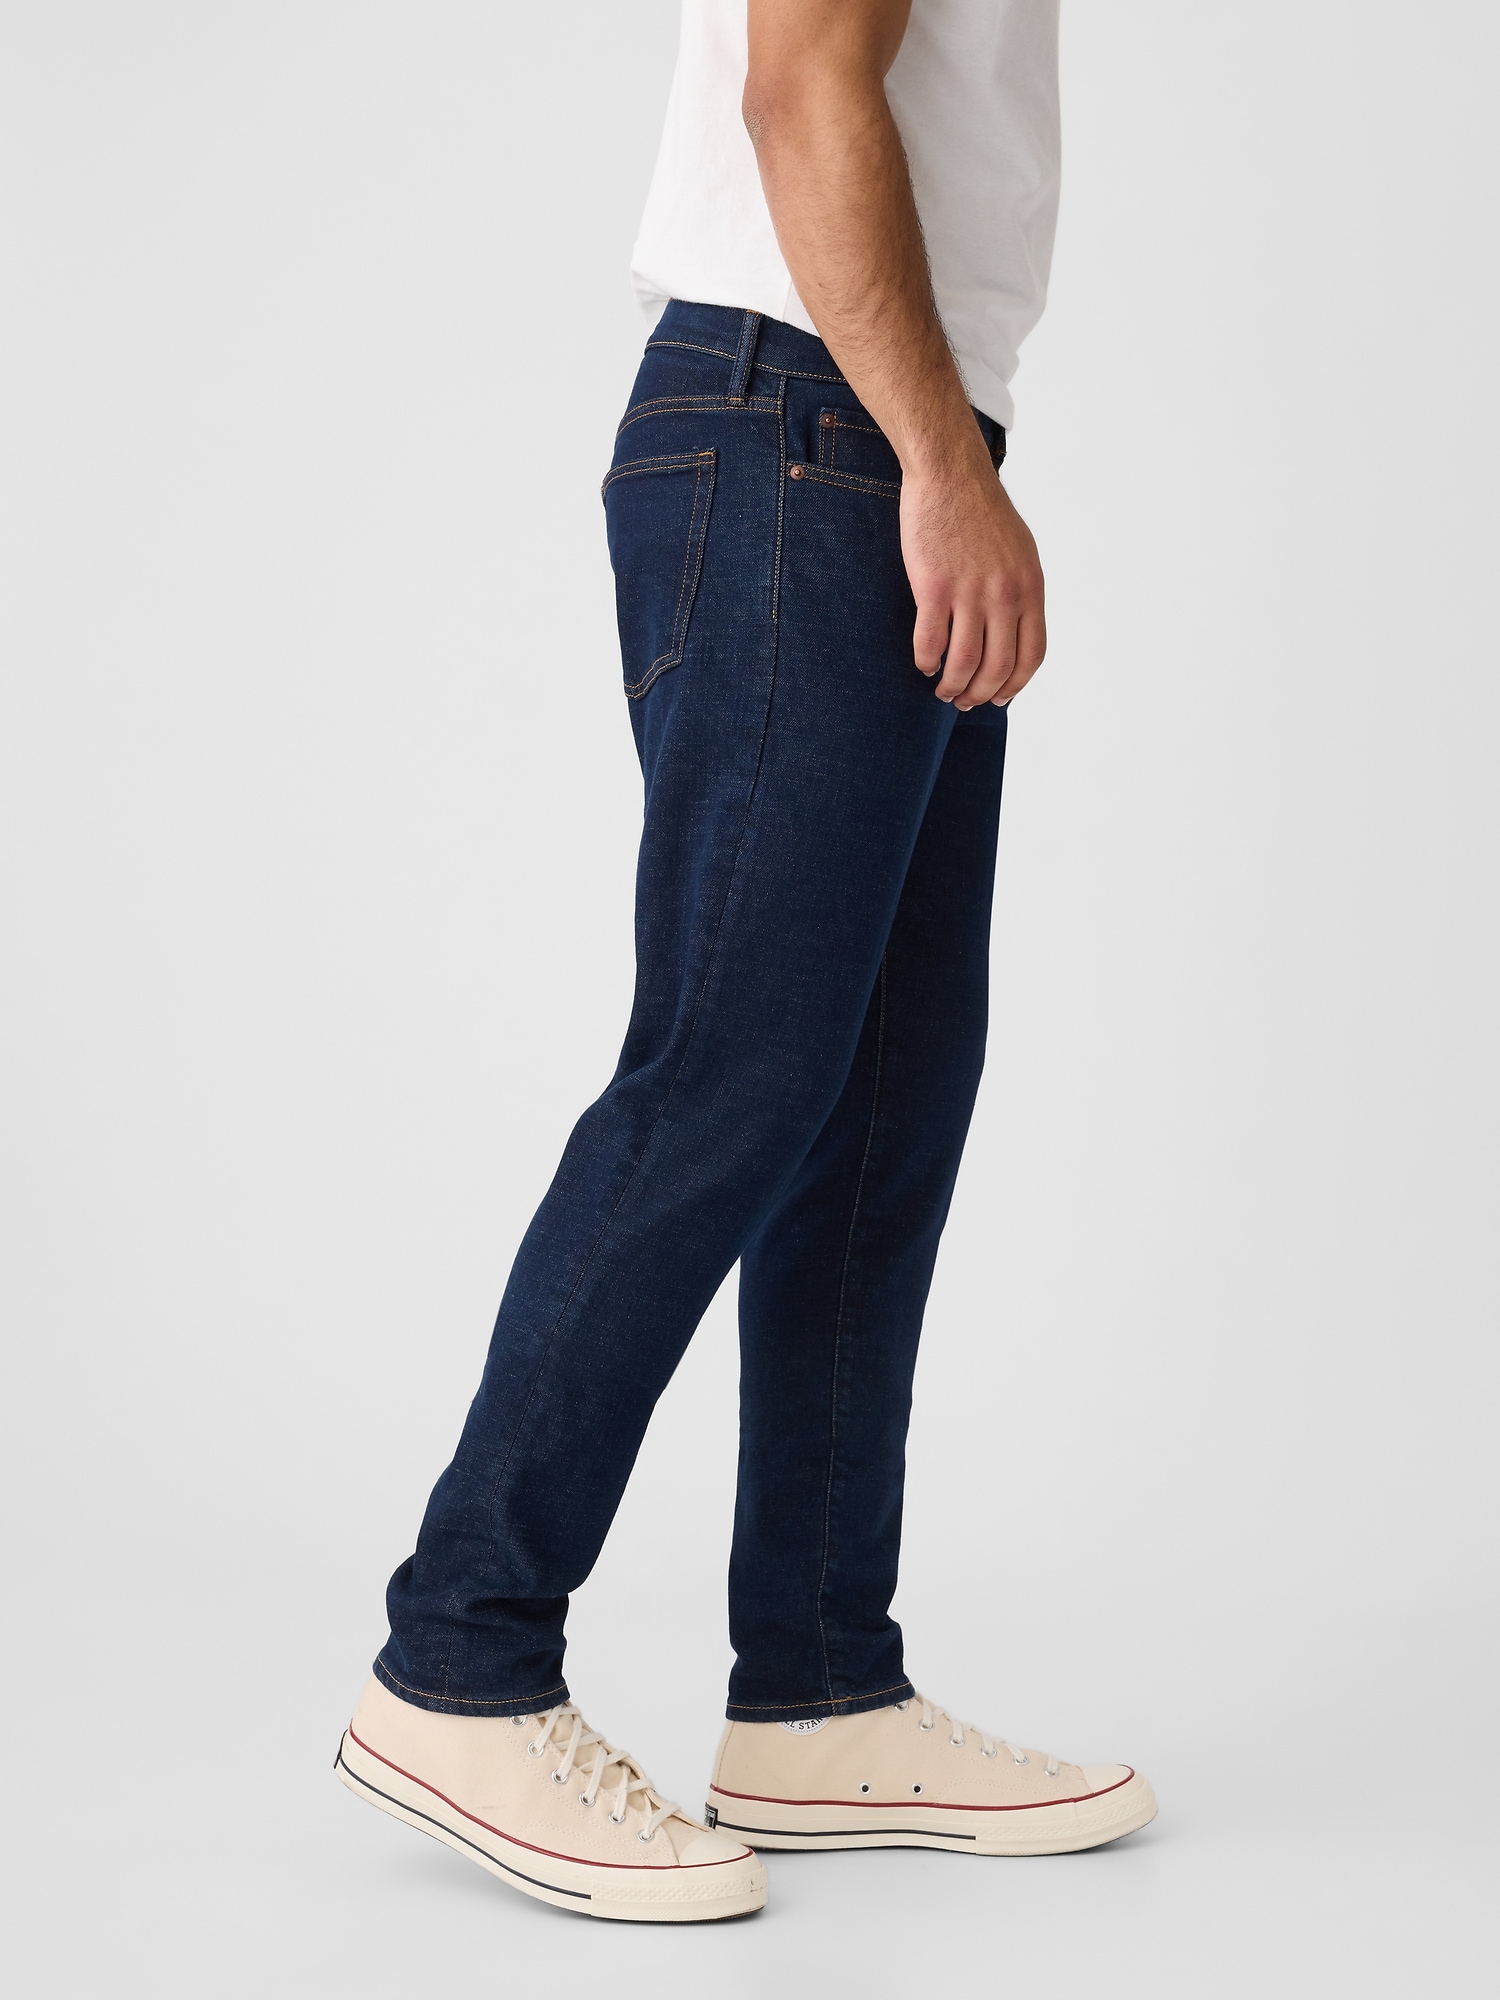 GAP Mens Gapflex Slim Jeans, Rinsed, 28W x 30L US at  Men's